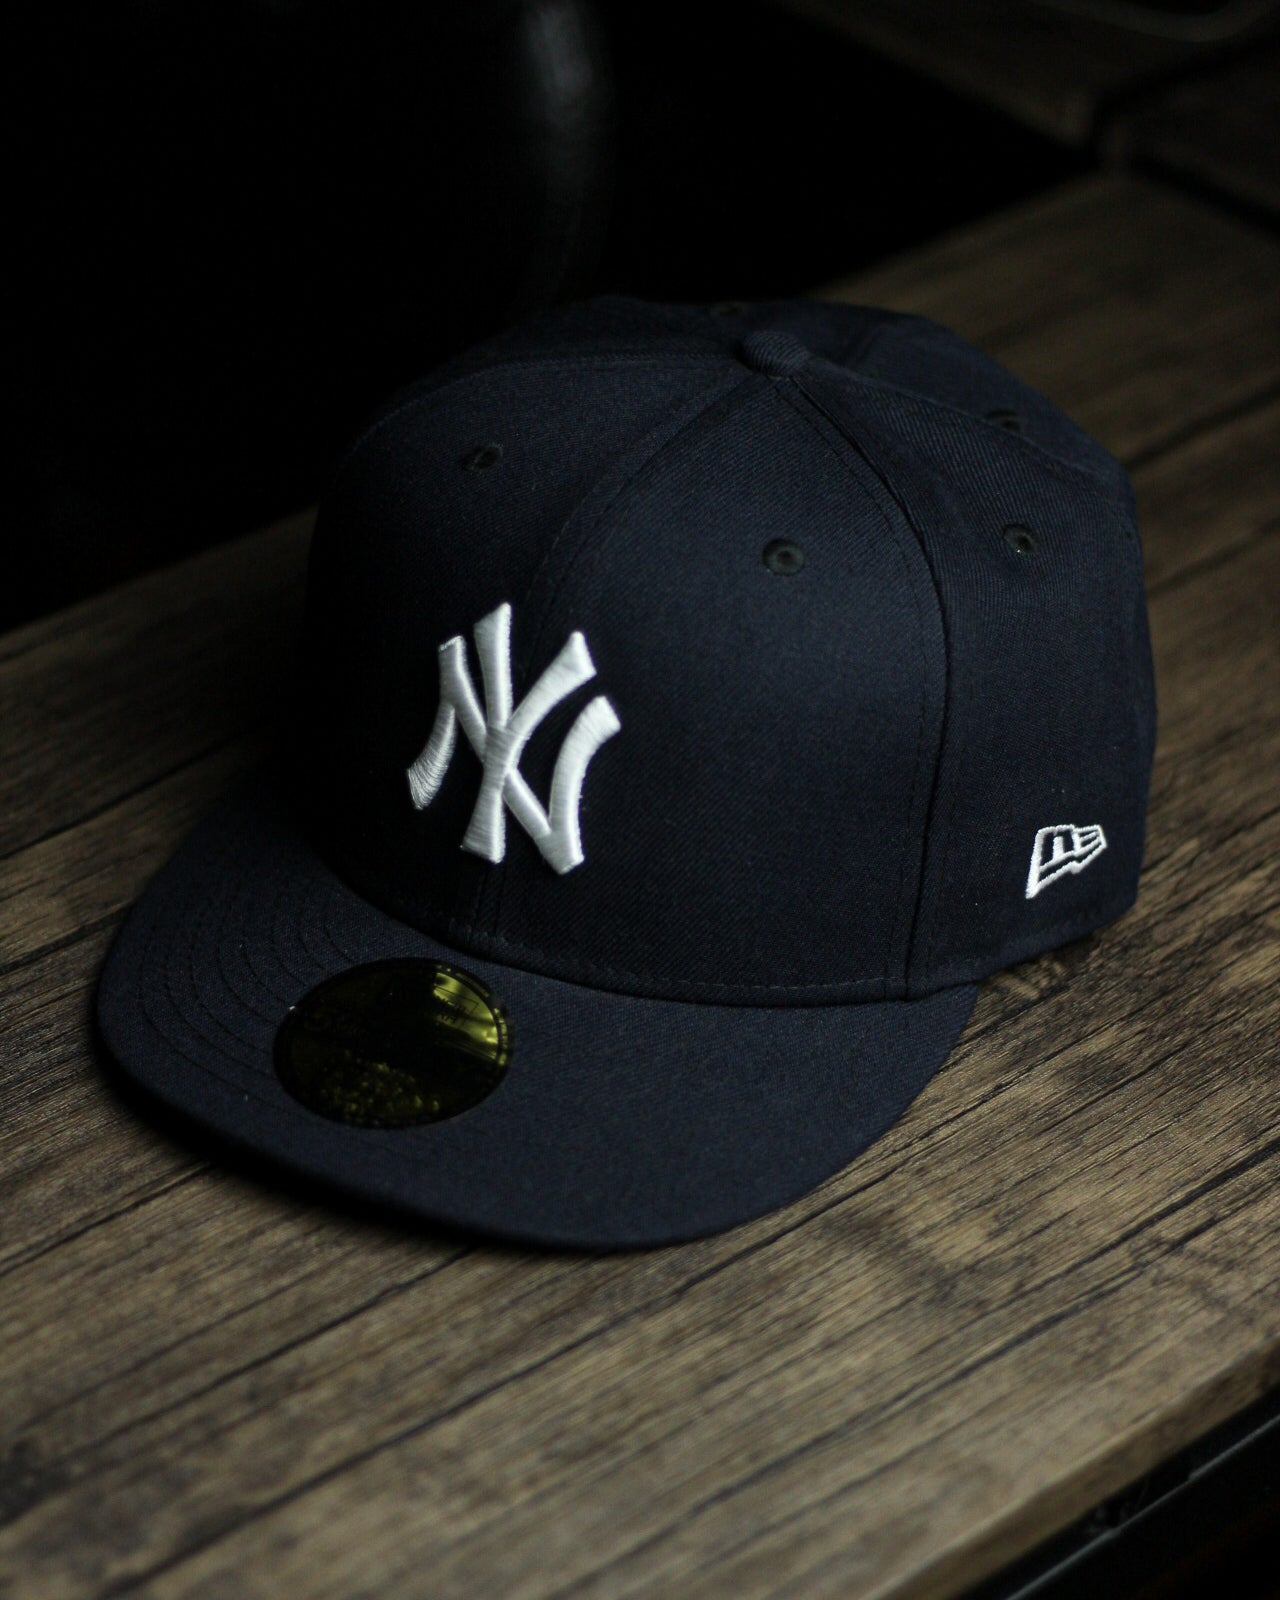 59FIFTY Gorra New Era New York Yankees color negro